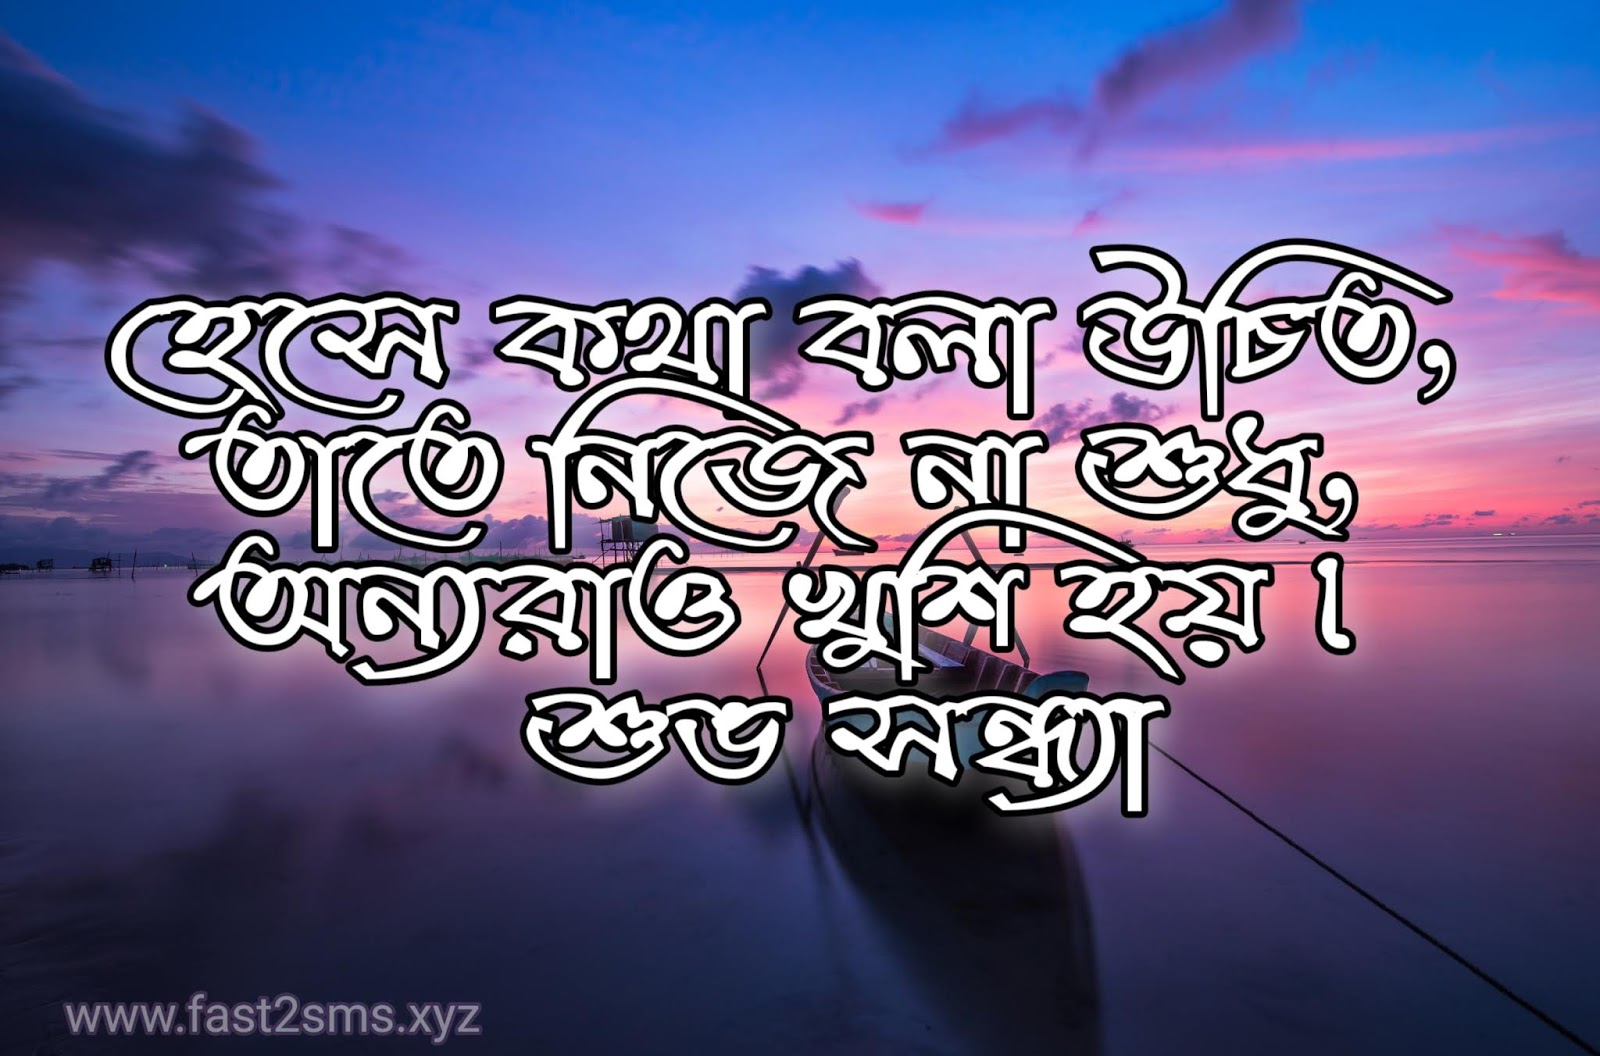 Suvo Sondha Kobita Image Good Evening Bangla Pictures By Fast2sms.